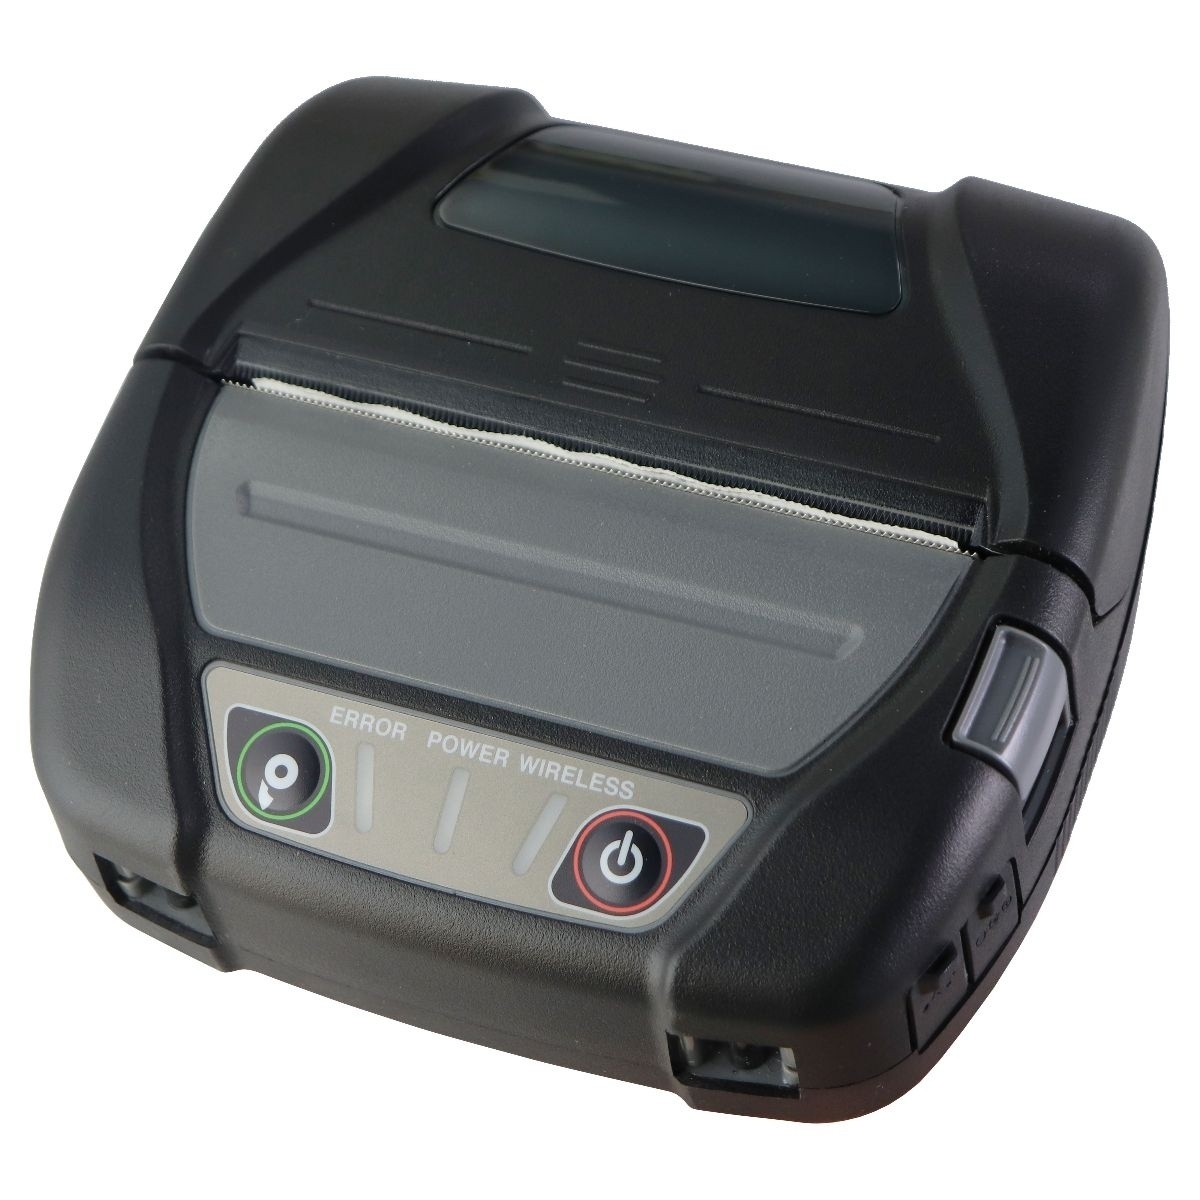 Seiko SII (MP-A40) Mobile Bluetooth Thermal Printer - Black